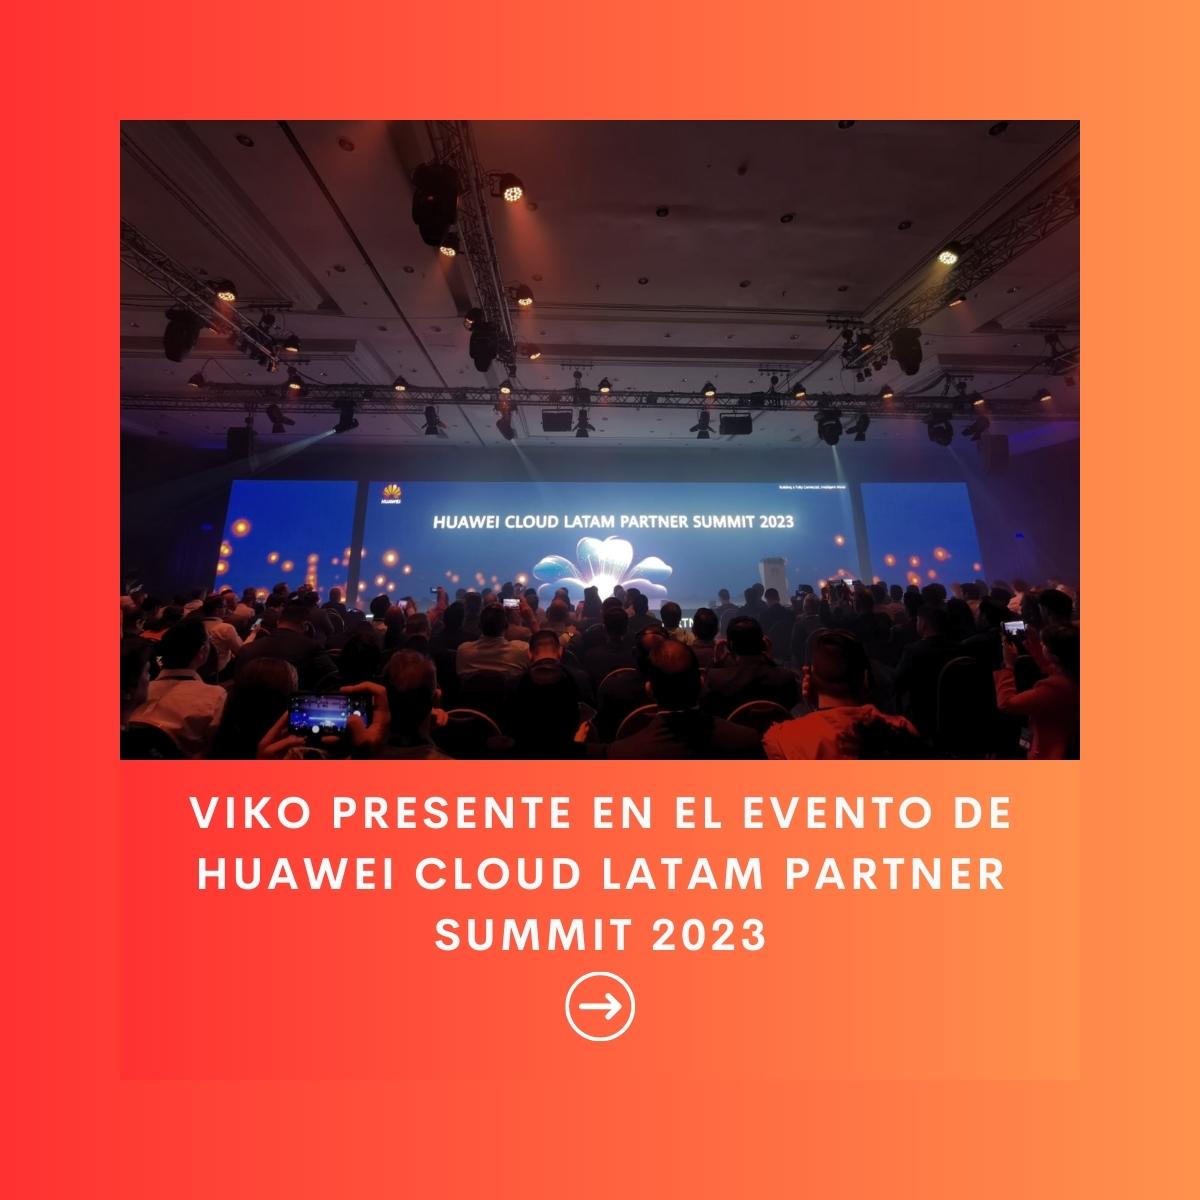 Huawei Cloud Latam Partner Summit 2023